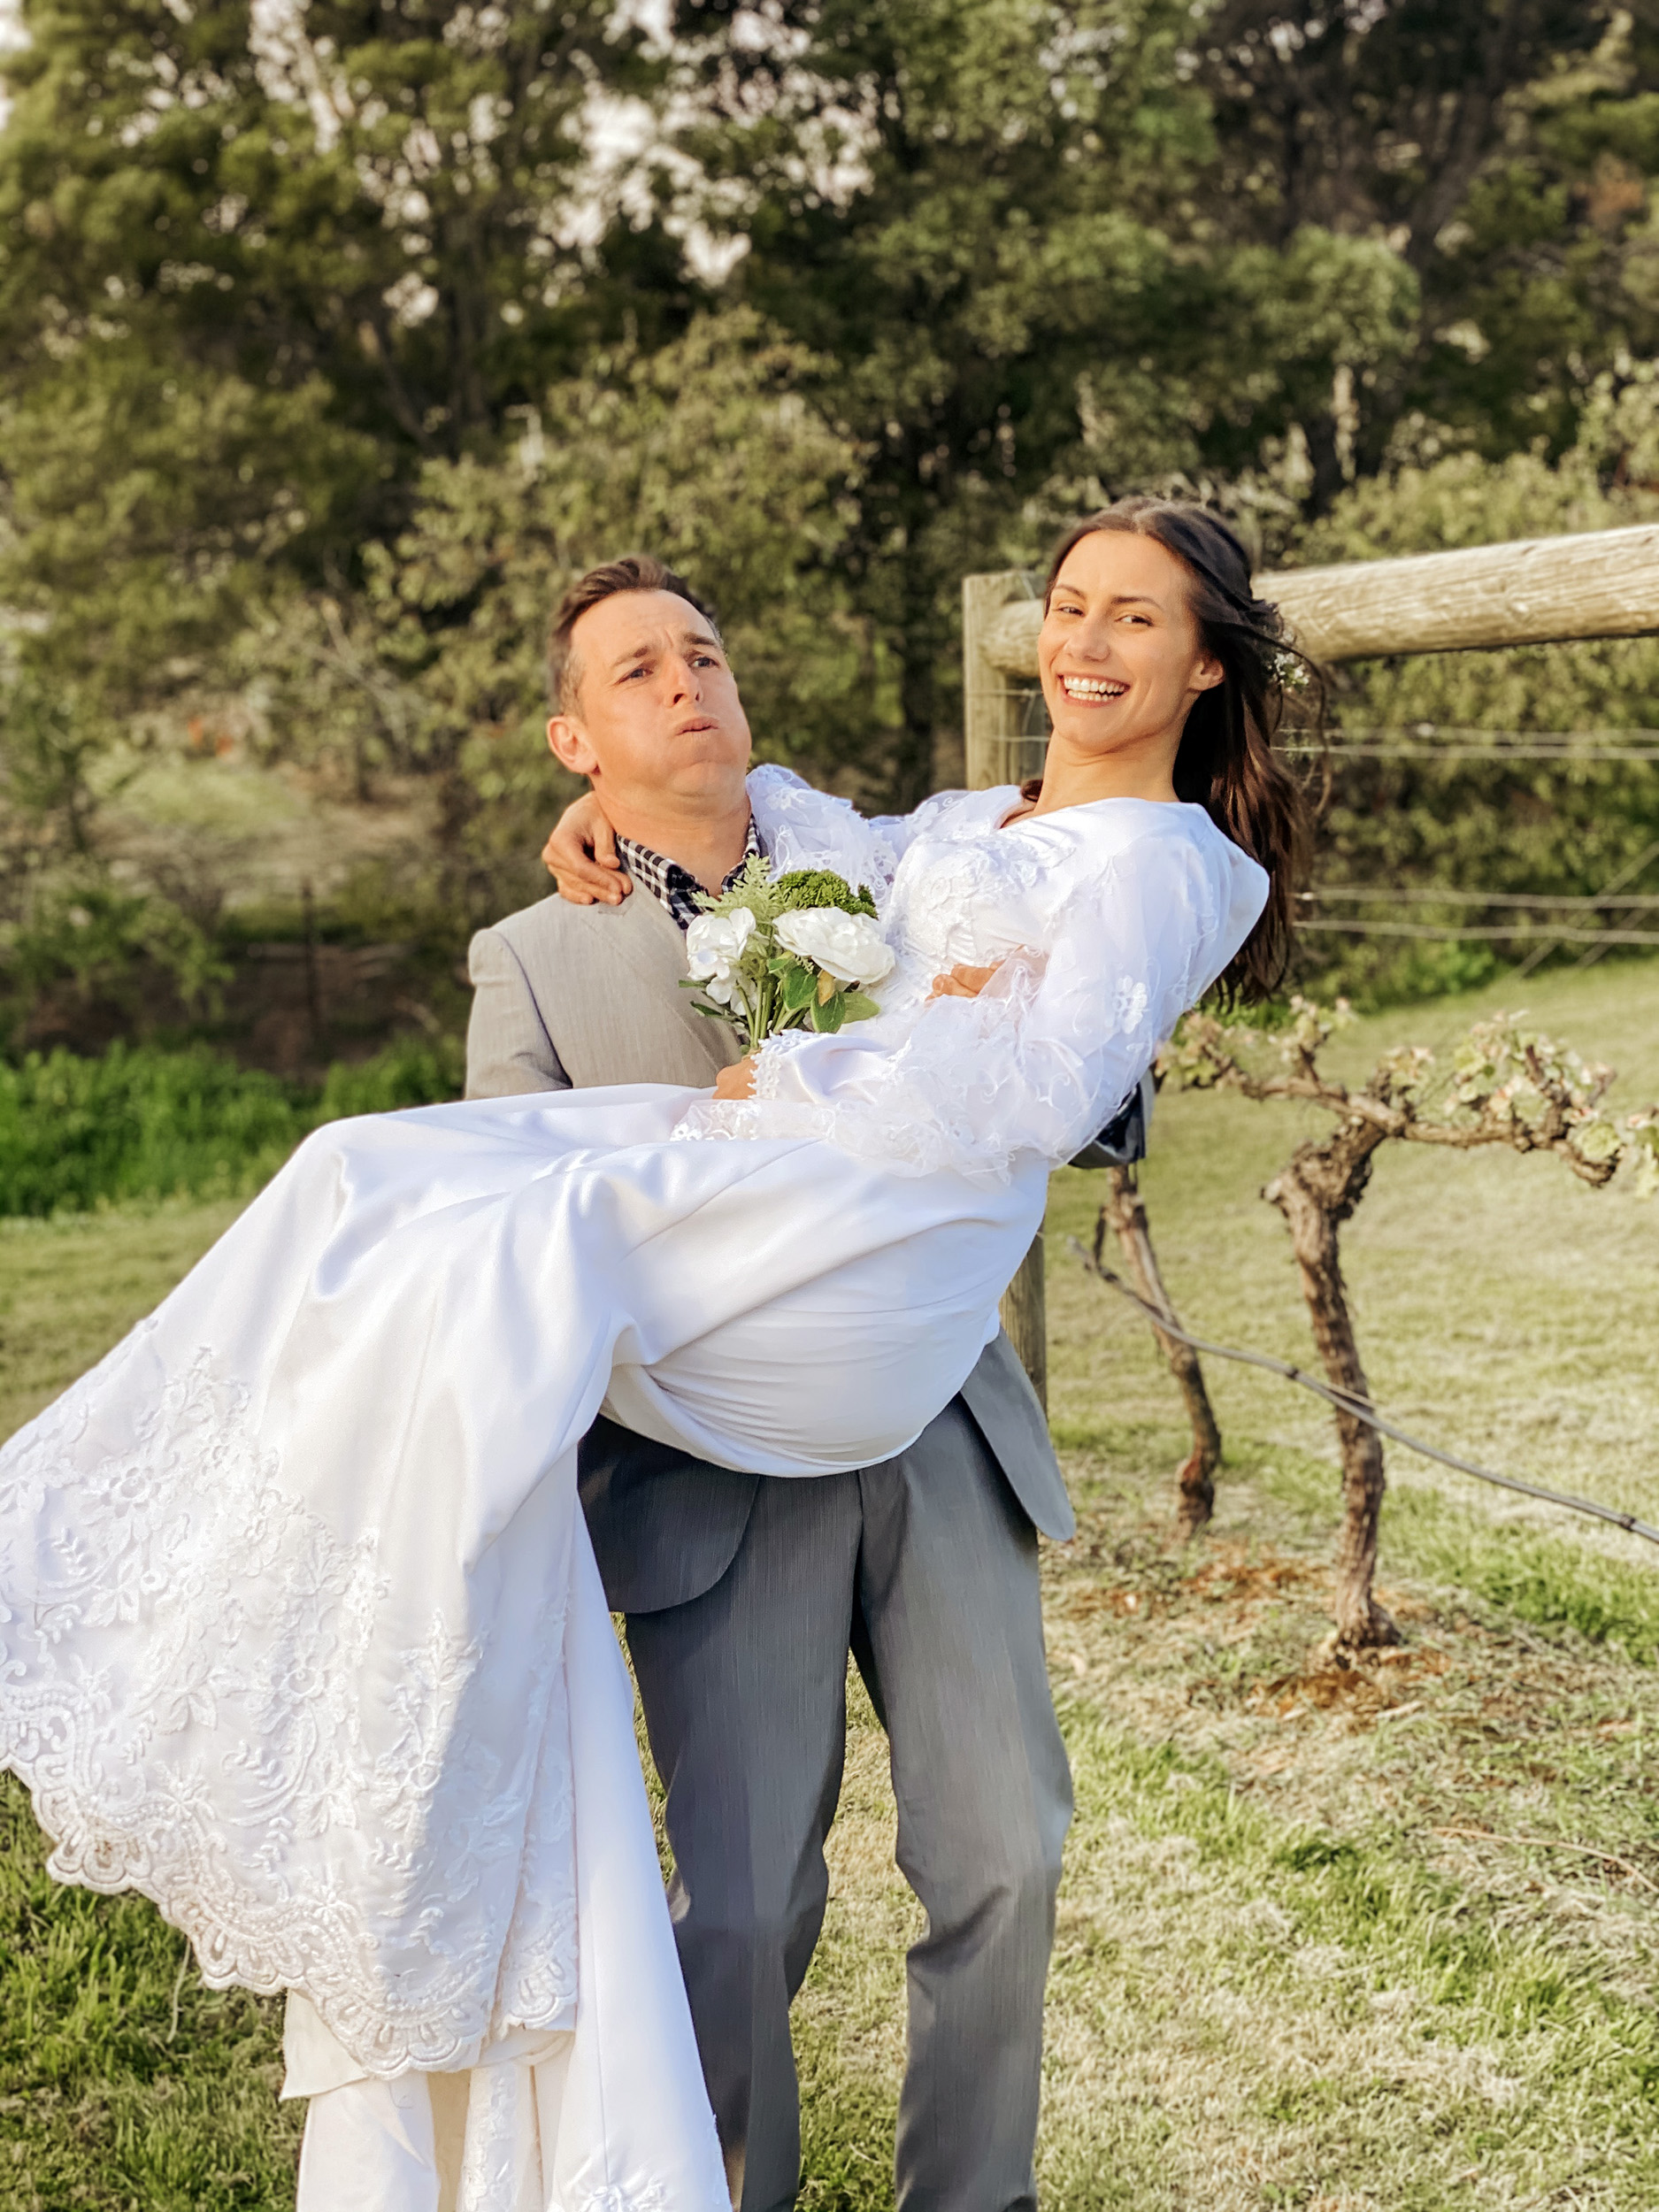 Groom carries bride for their wedding photo in a vineyard near Hobart